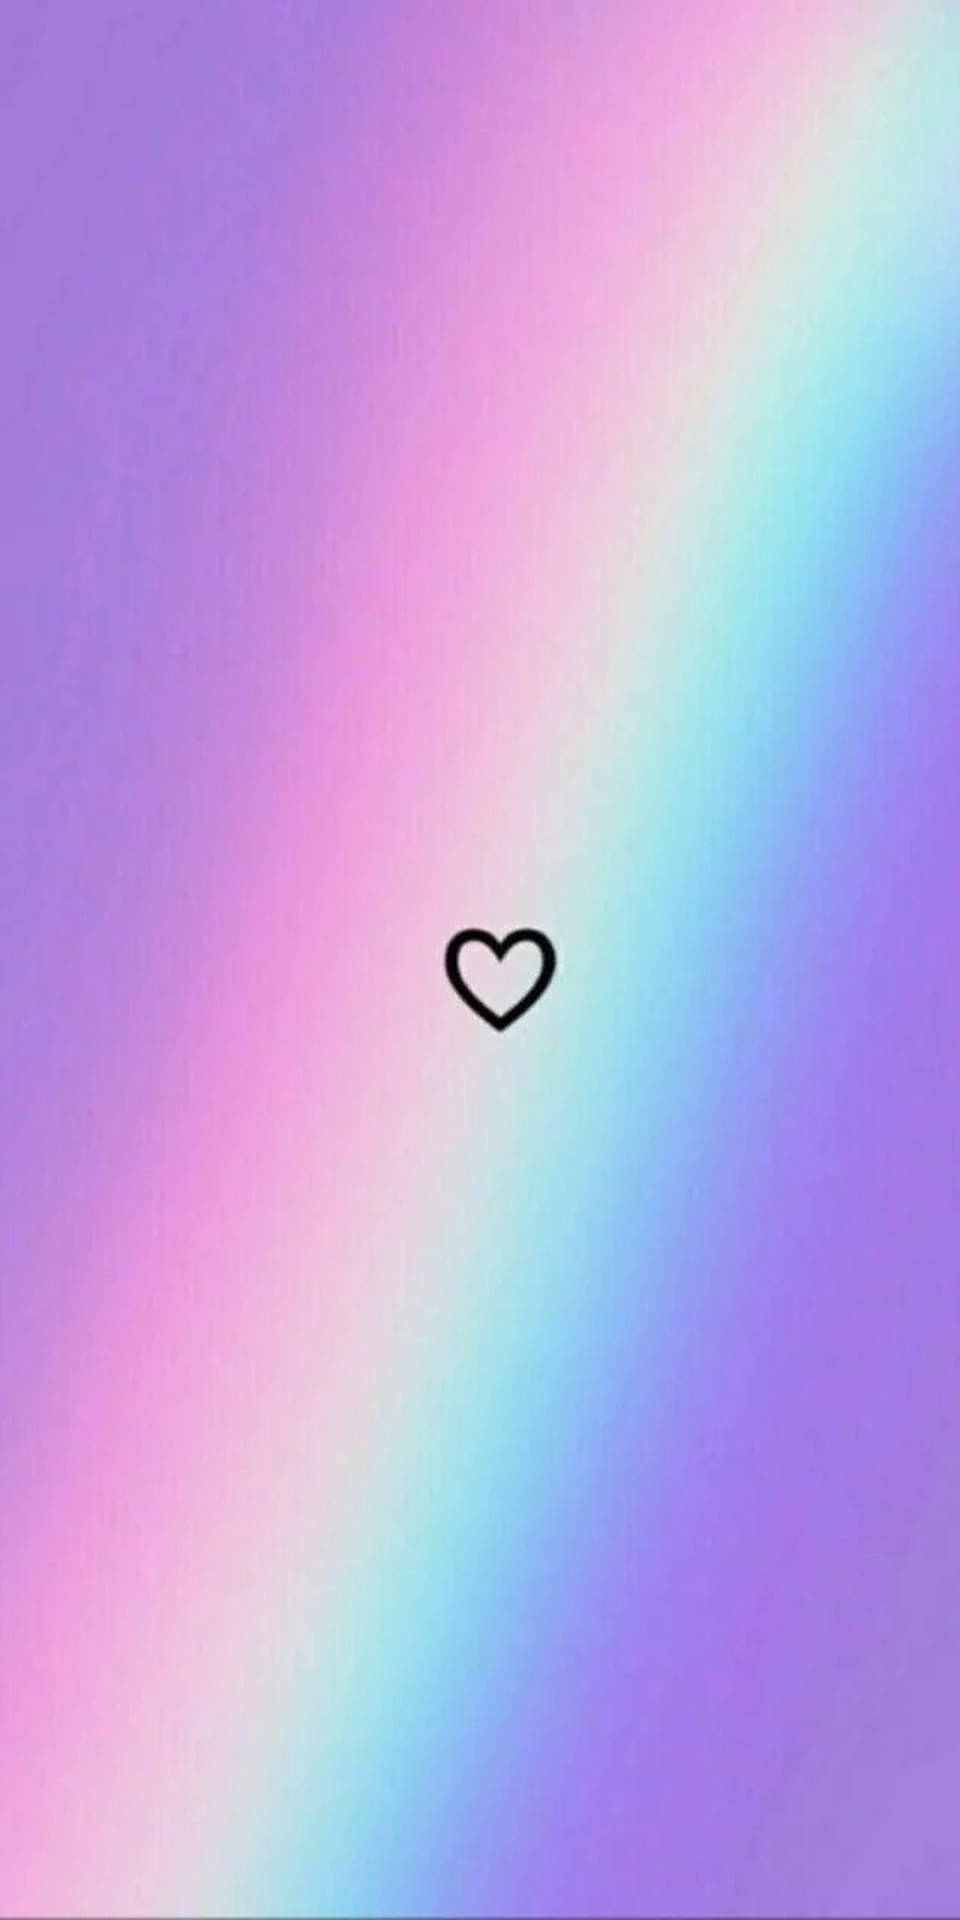 Aesthetic Purple Pastel Rainbow With Heart